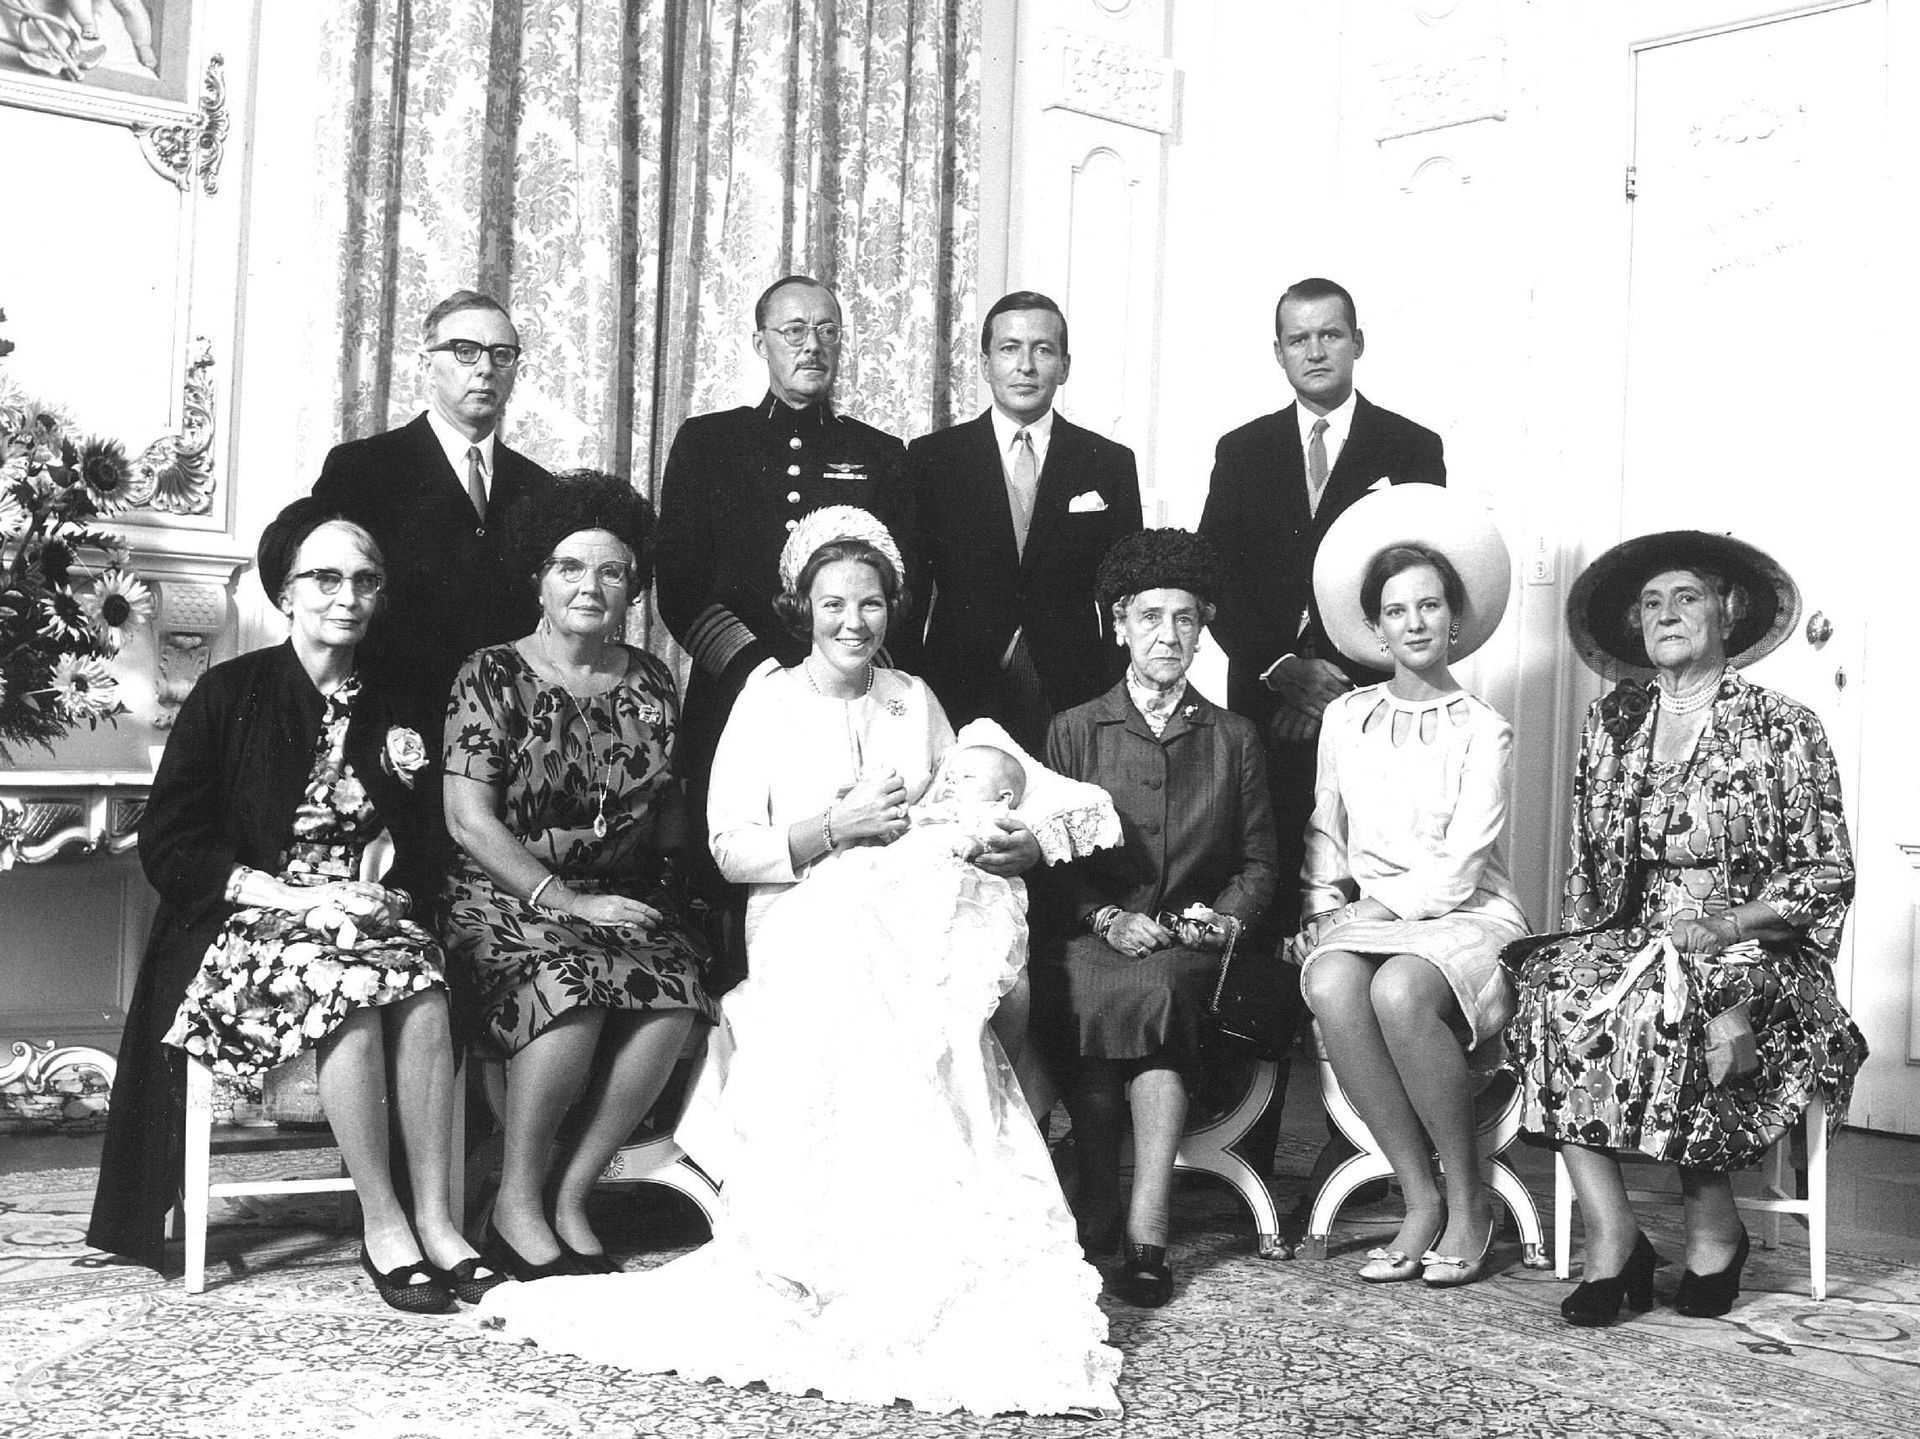 Op 2 september 1967 wordt prins Willem-Alexander gedoopt in Den Haag. Kroonprinses Margrethe is